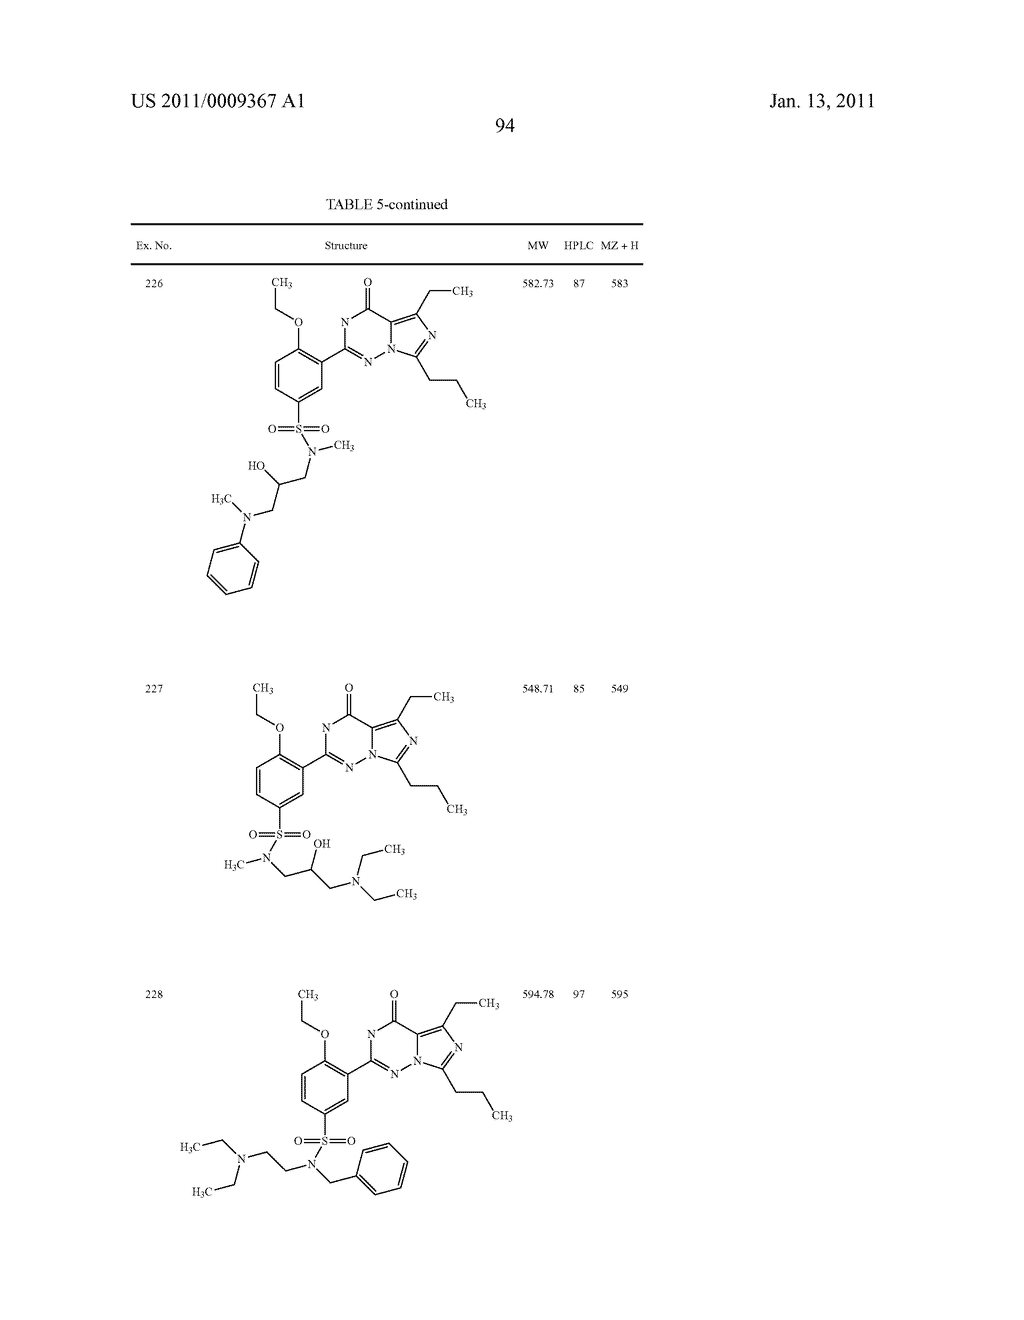 2-PHENYL SUBSTITUTED IMIDAZOTRIAZINONES AS PHOSPHODIESTERASE INHIBITORS - diagram, schematic, and image 95